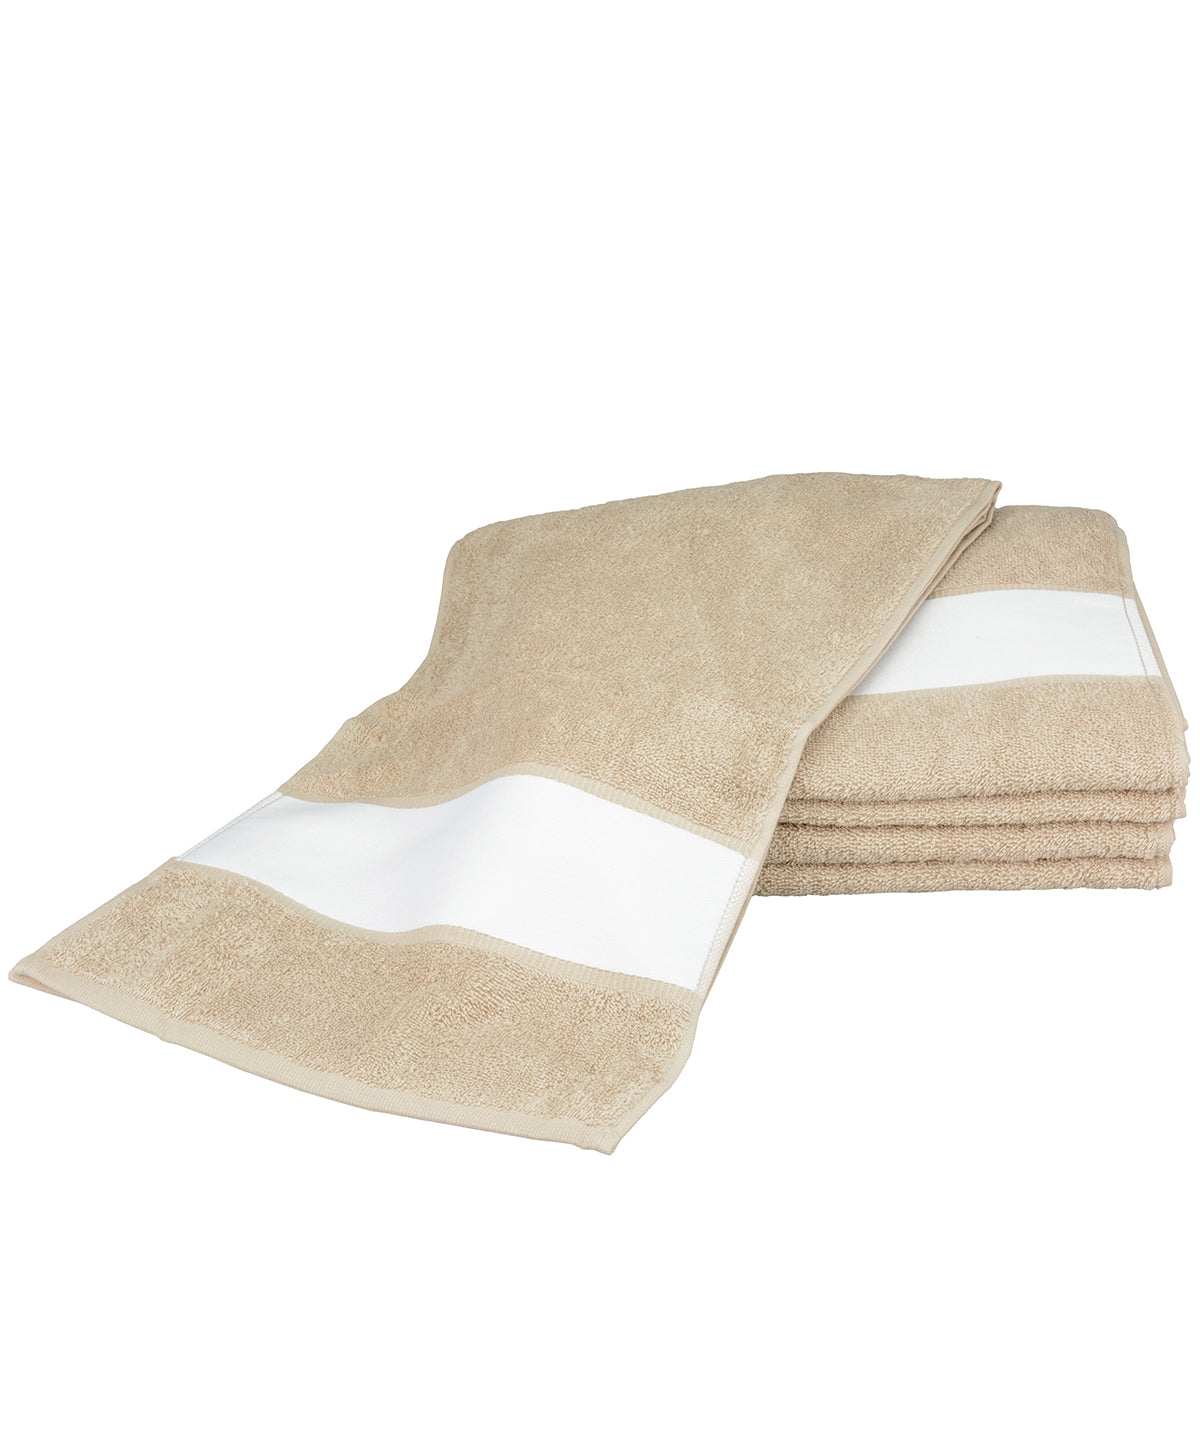 Personalised Towels - Natural A&R Towels ARTG® SUBLI-Me® sport towel